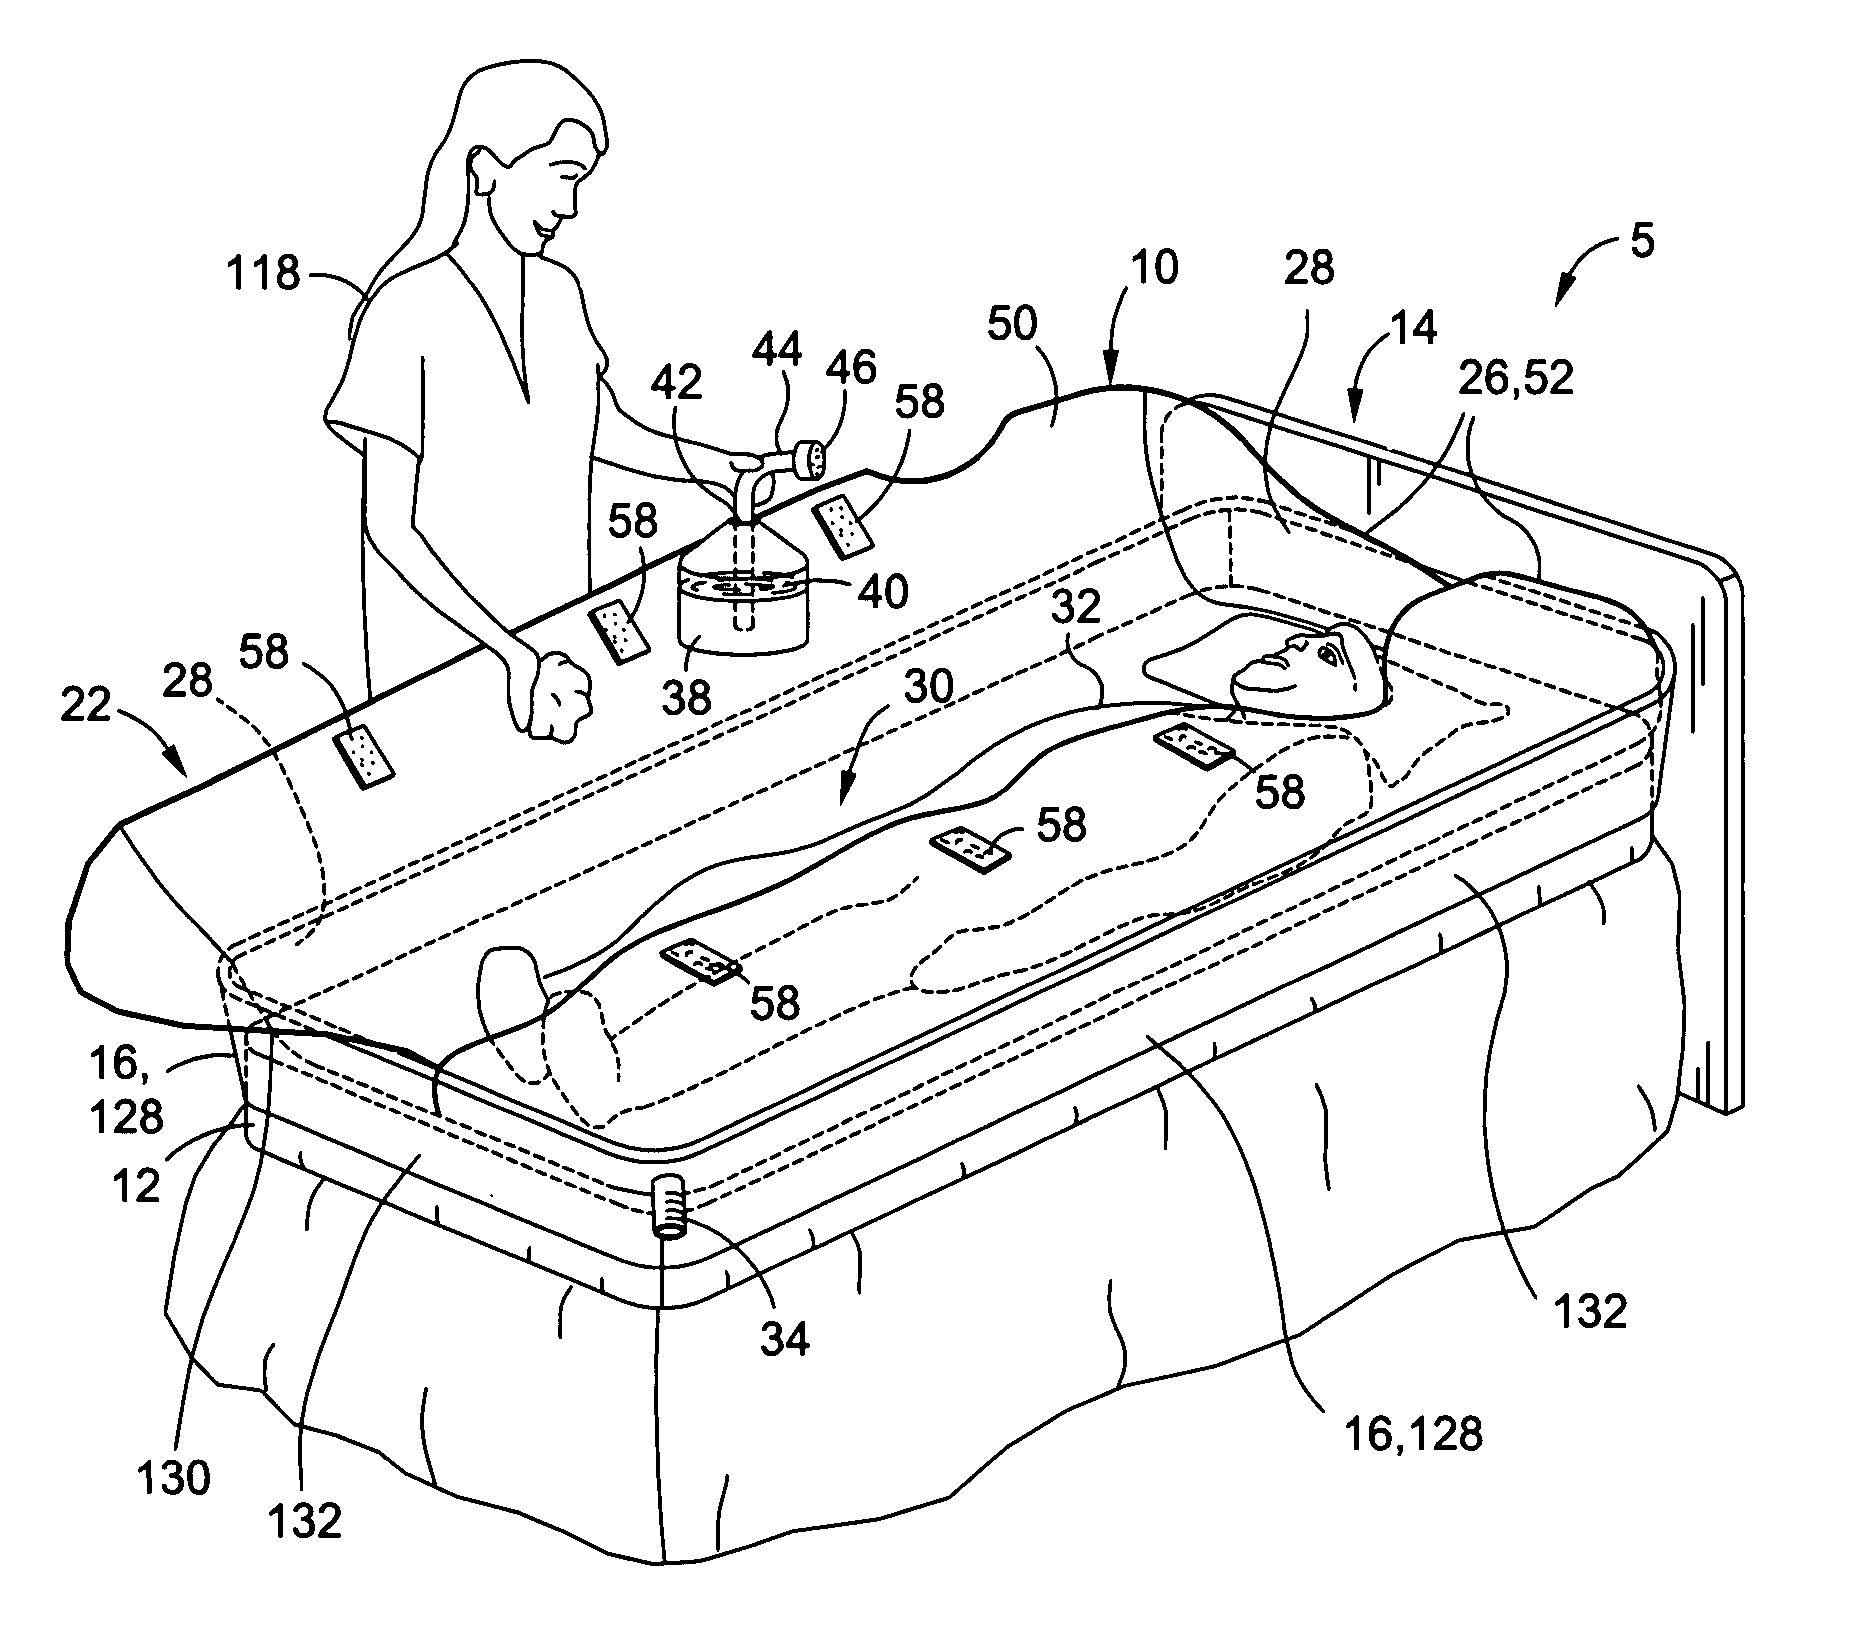 Universal bed bath envelope system